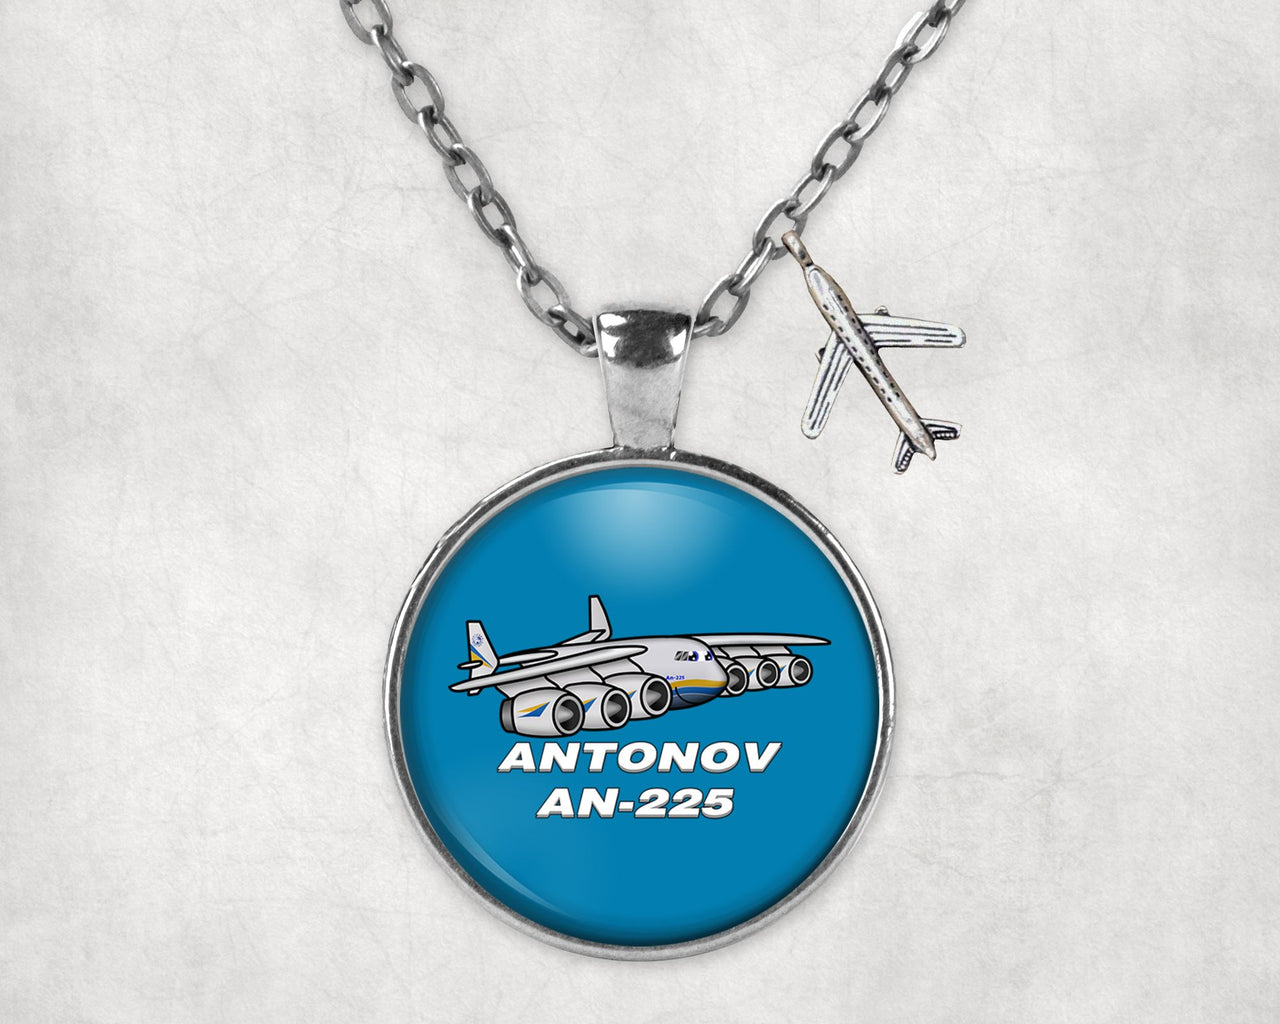 Antonov AN-225 (25) Designed Necklaces